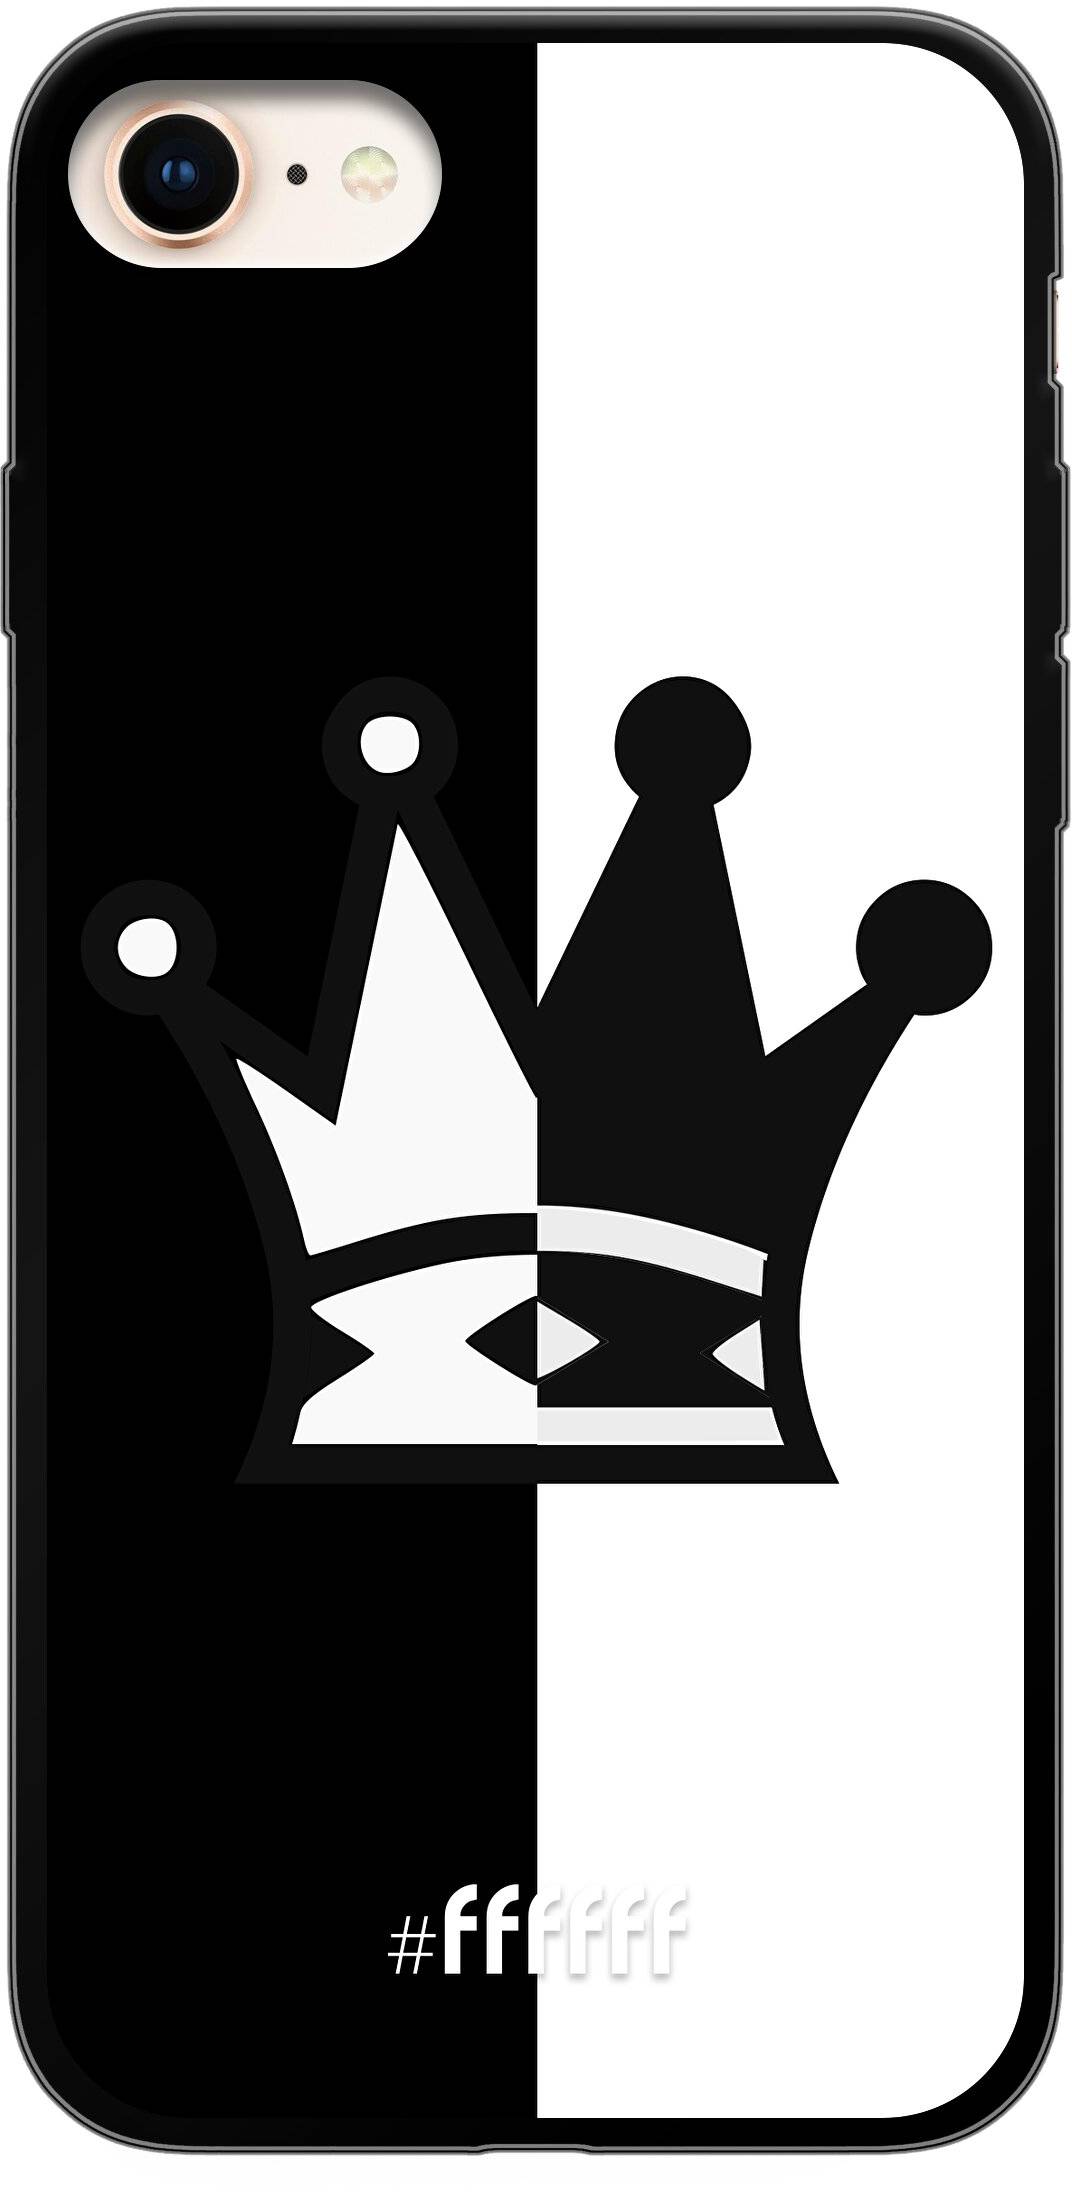 Chess iPhone 7